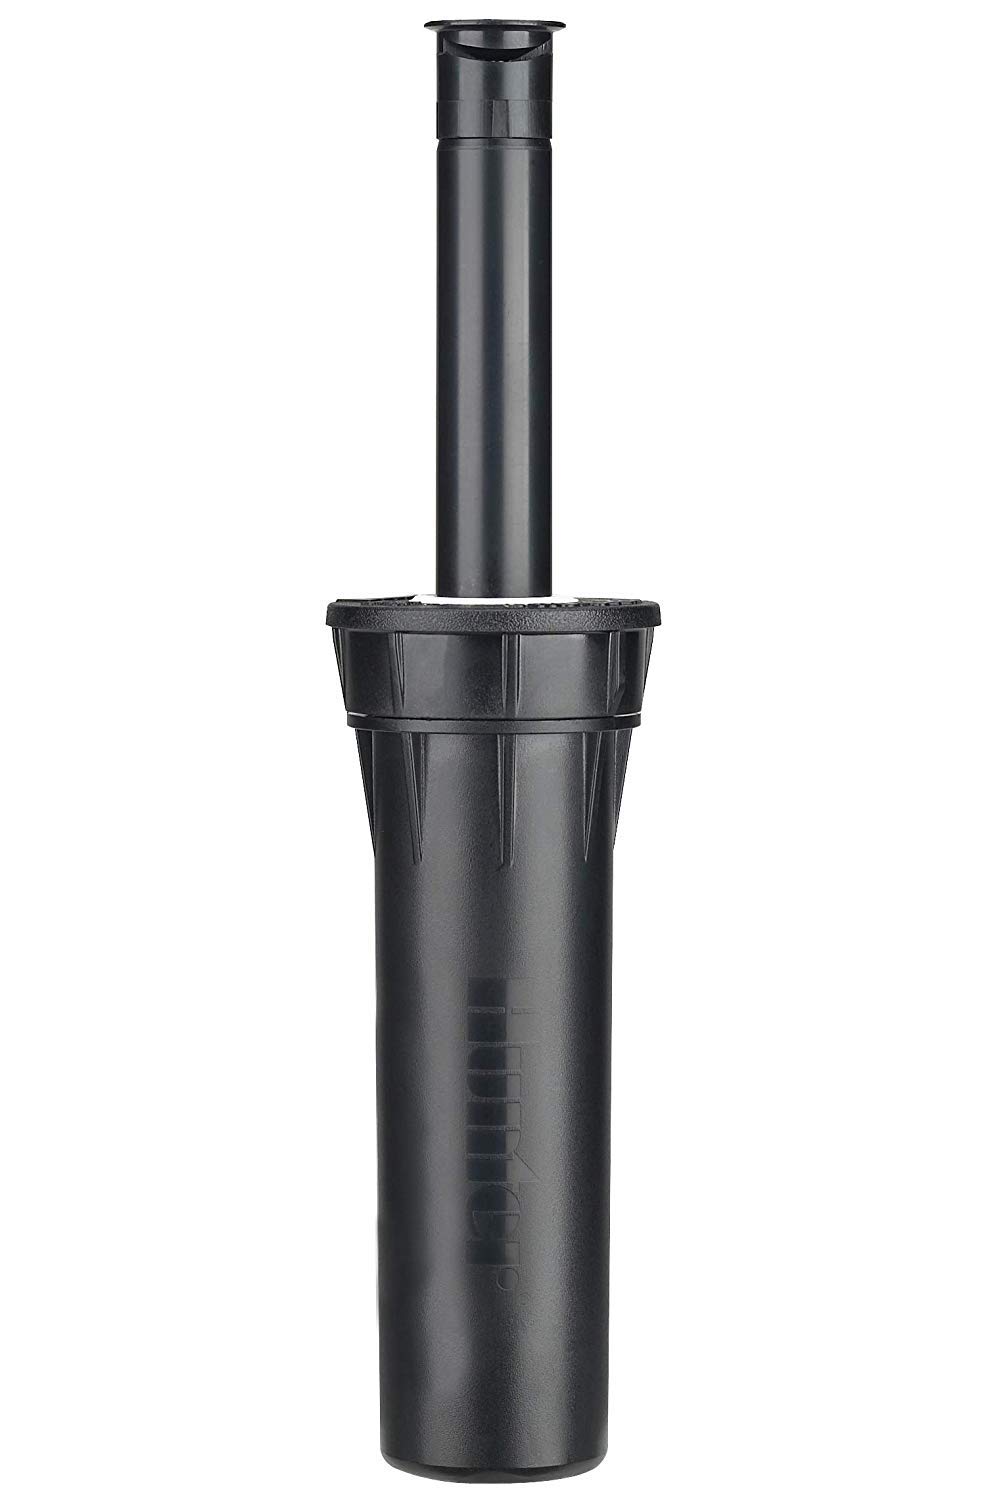 Hunter PROS-04 Pro Spray Irrigation Head 4" Pop-Up Sprinkler with 15A 0°-360° Adjustable Nozzle 15' Spray Distance (10)